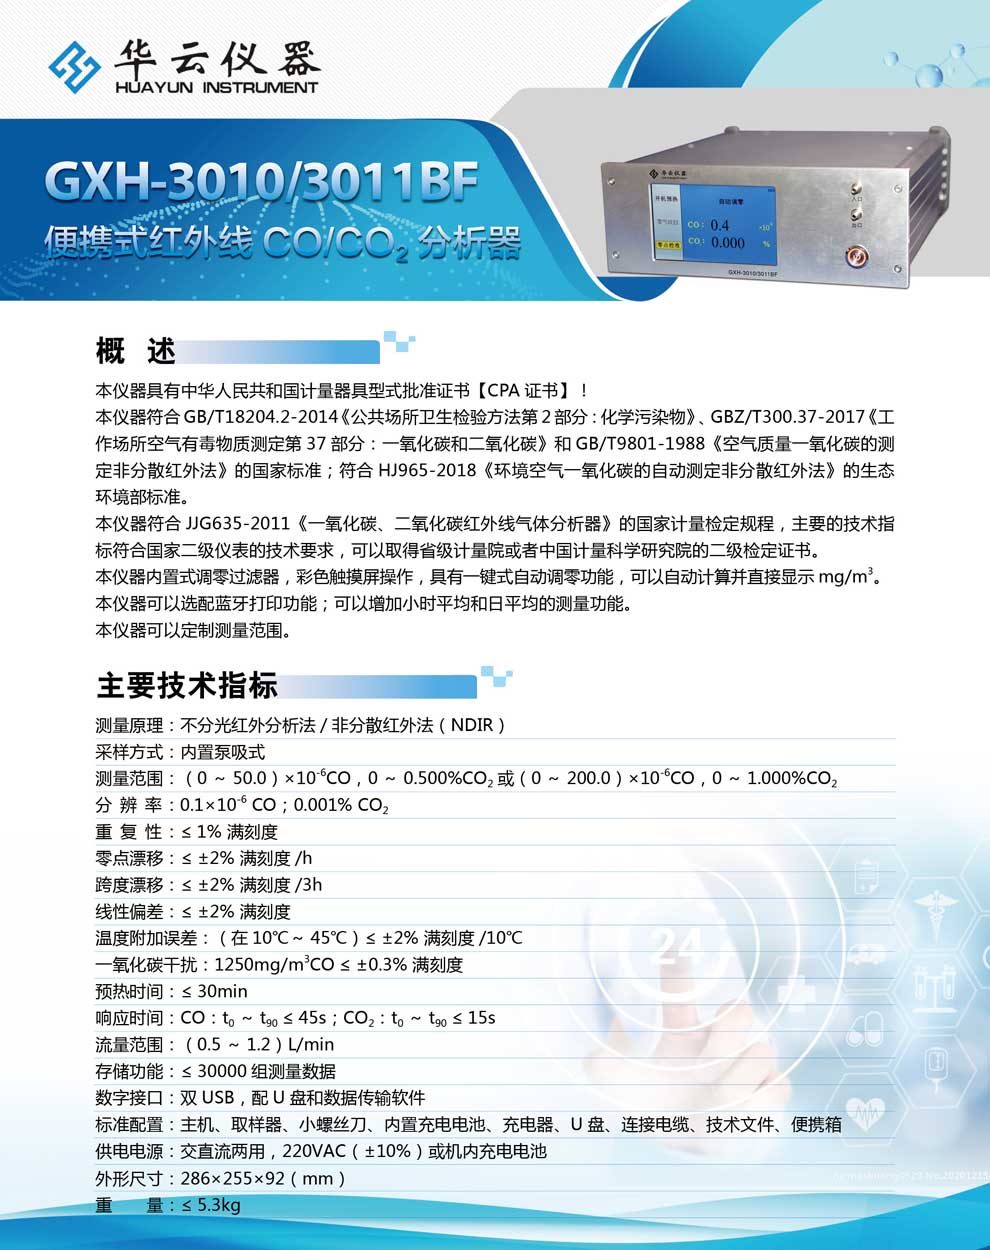 GXH-3010、3011BF系列-彩页.jpg